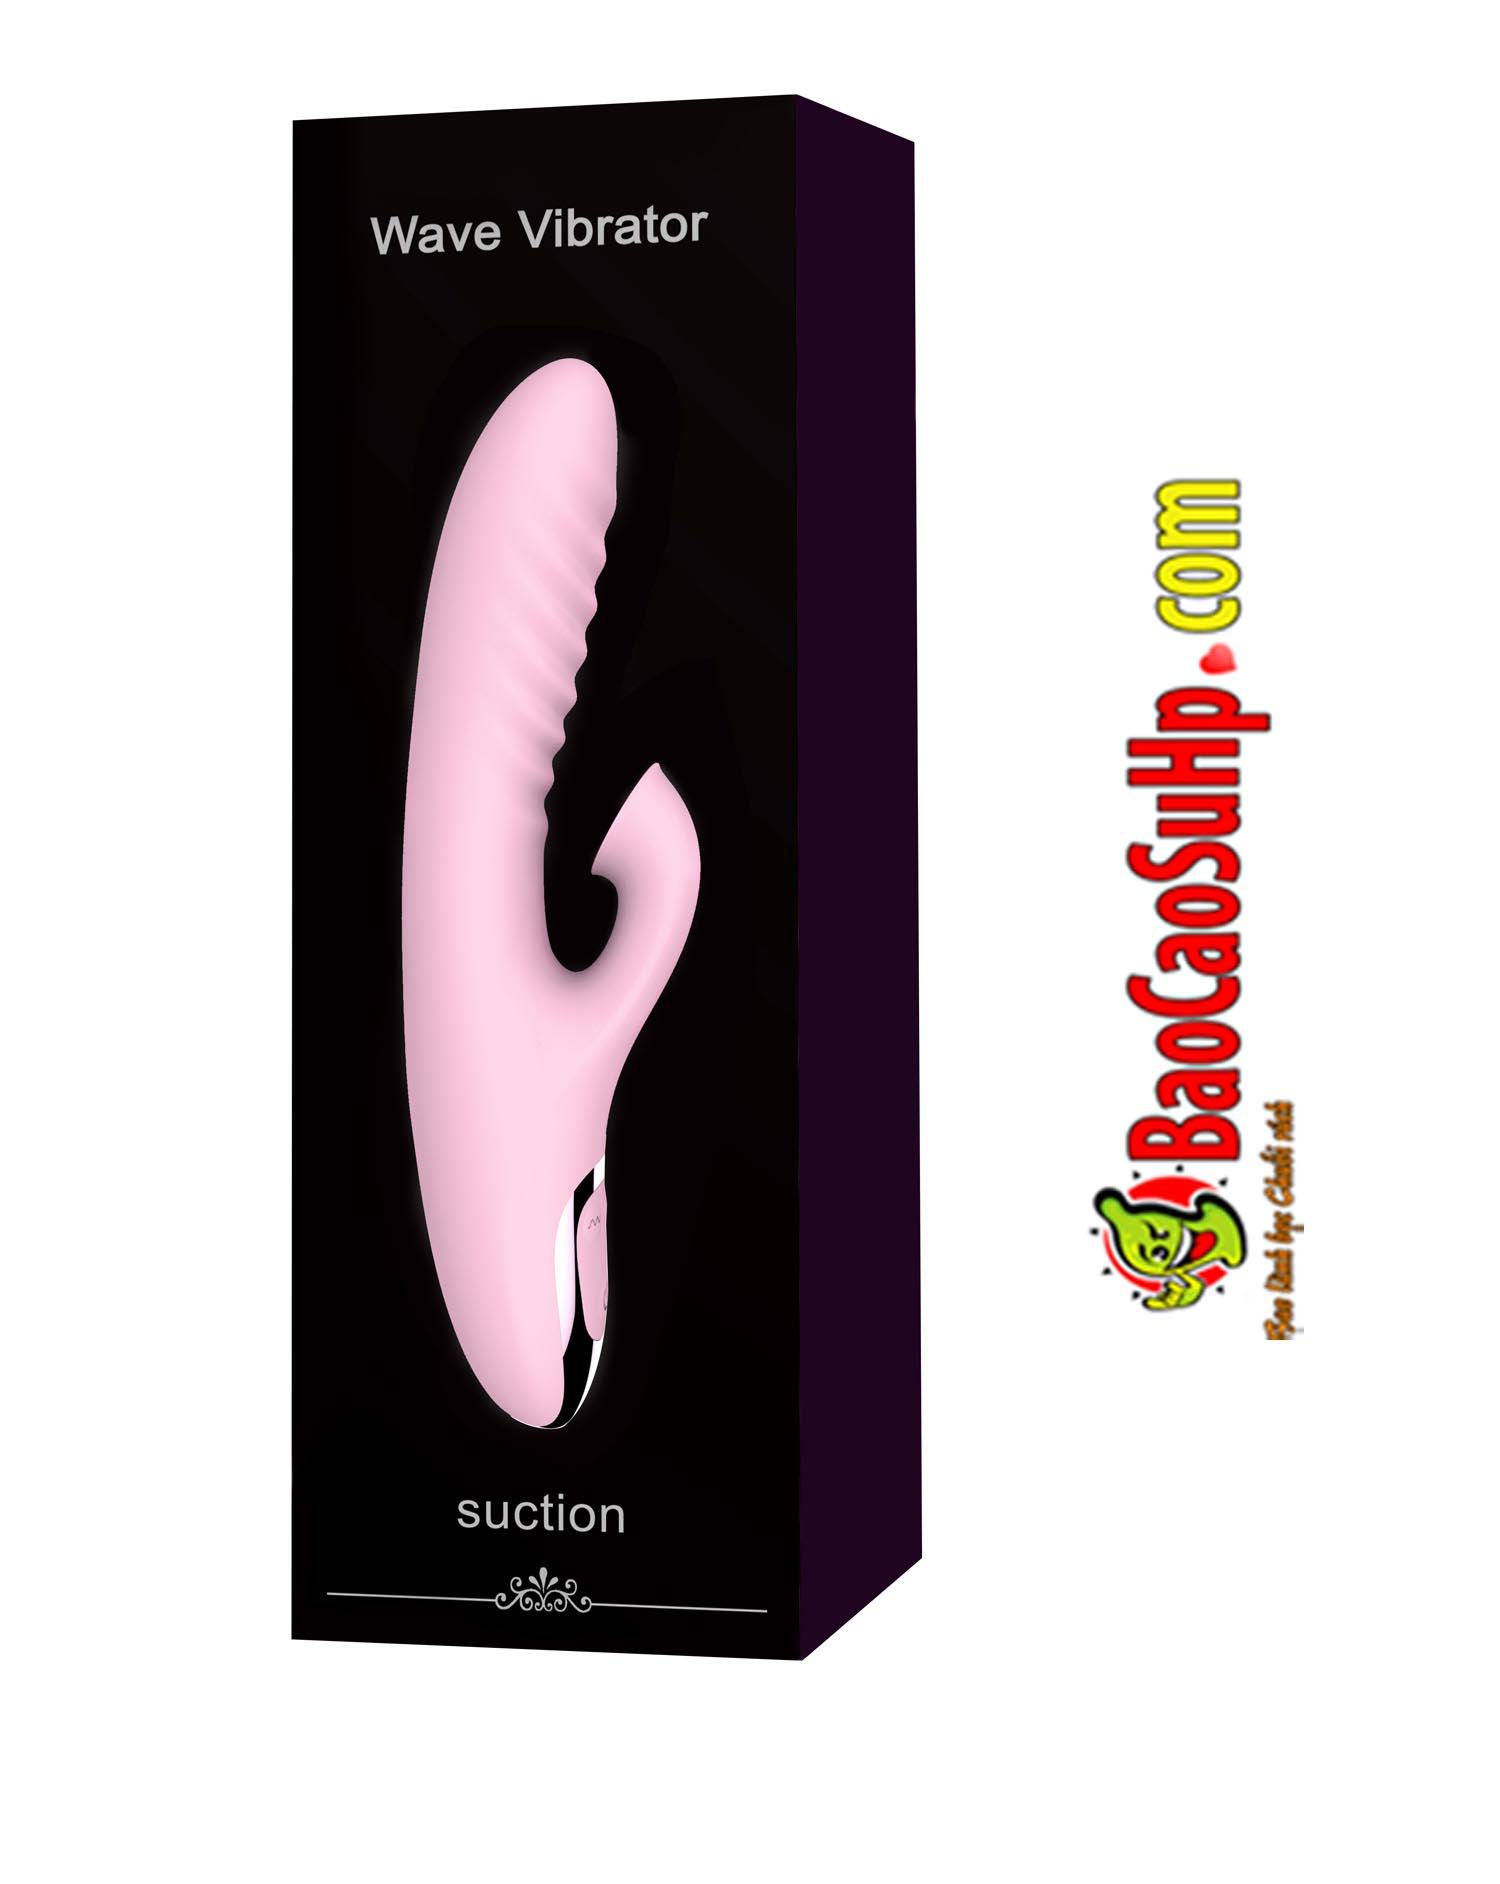 20190703223550 8789667 sextoy duong vat safiman wave vibrator 11 - Sextoy dương vật safiman wave vibrator thổi cực khoái.